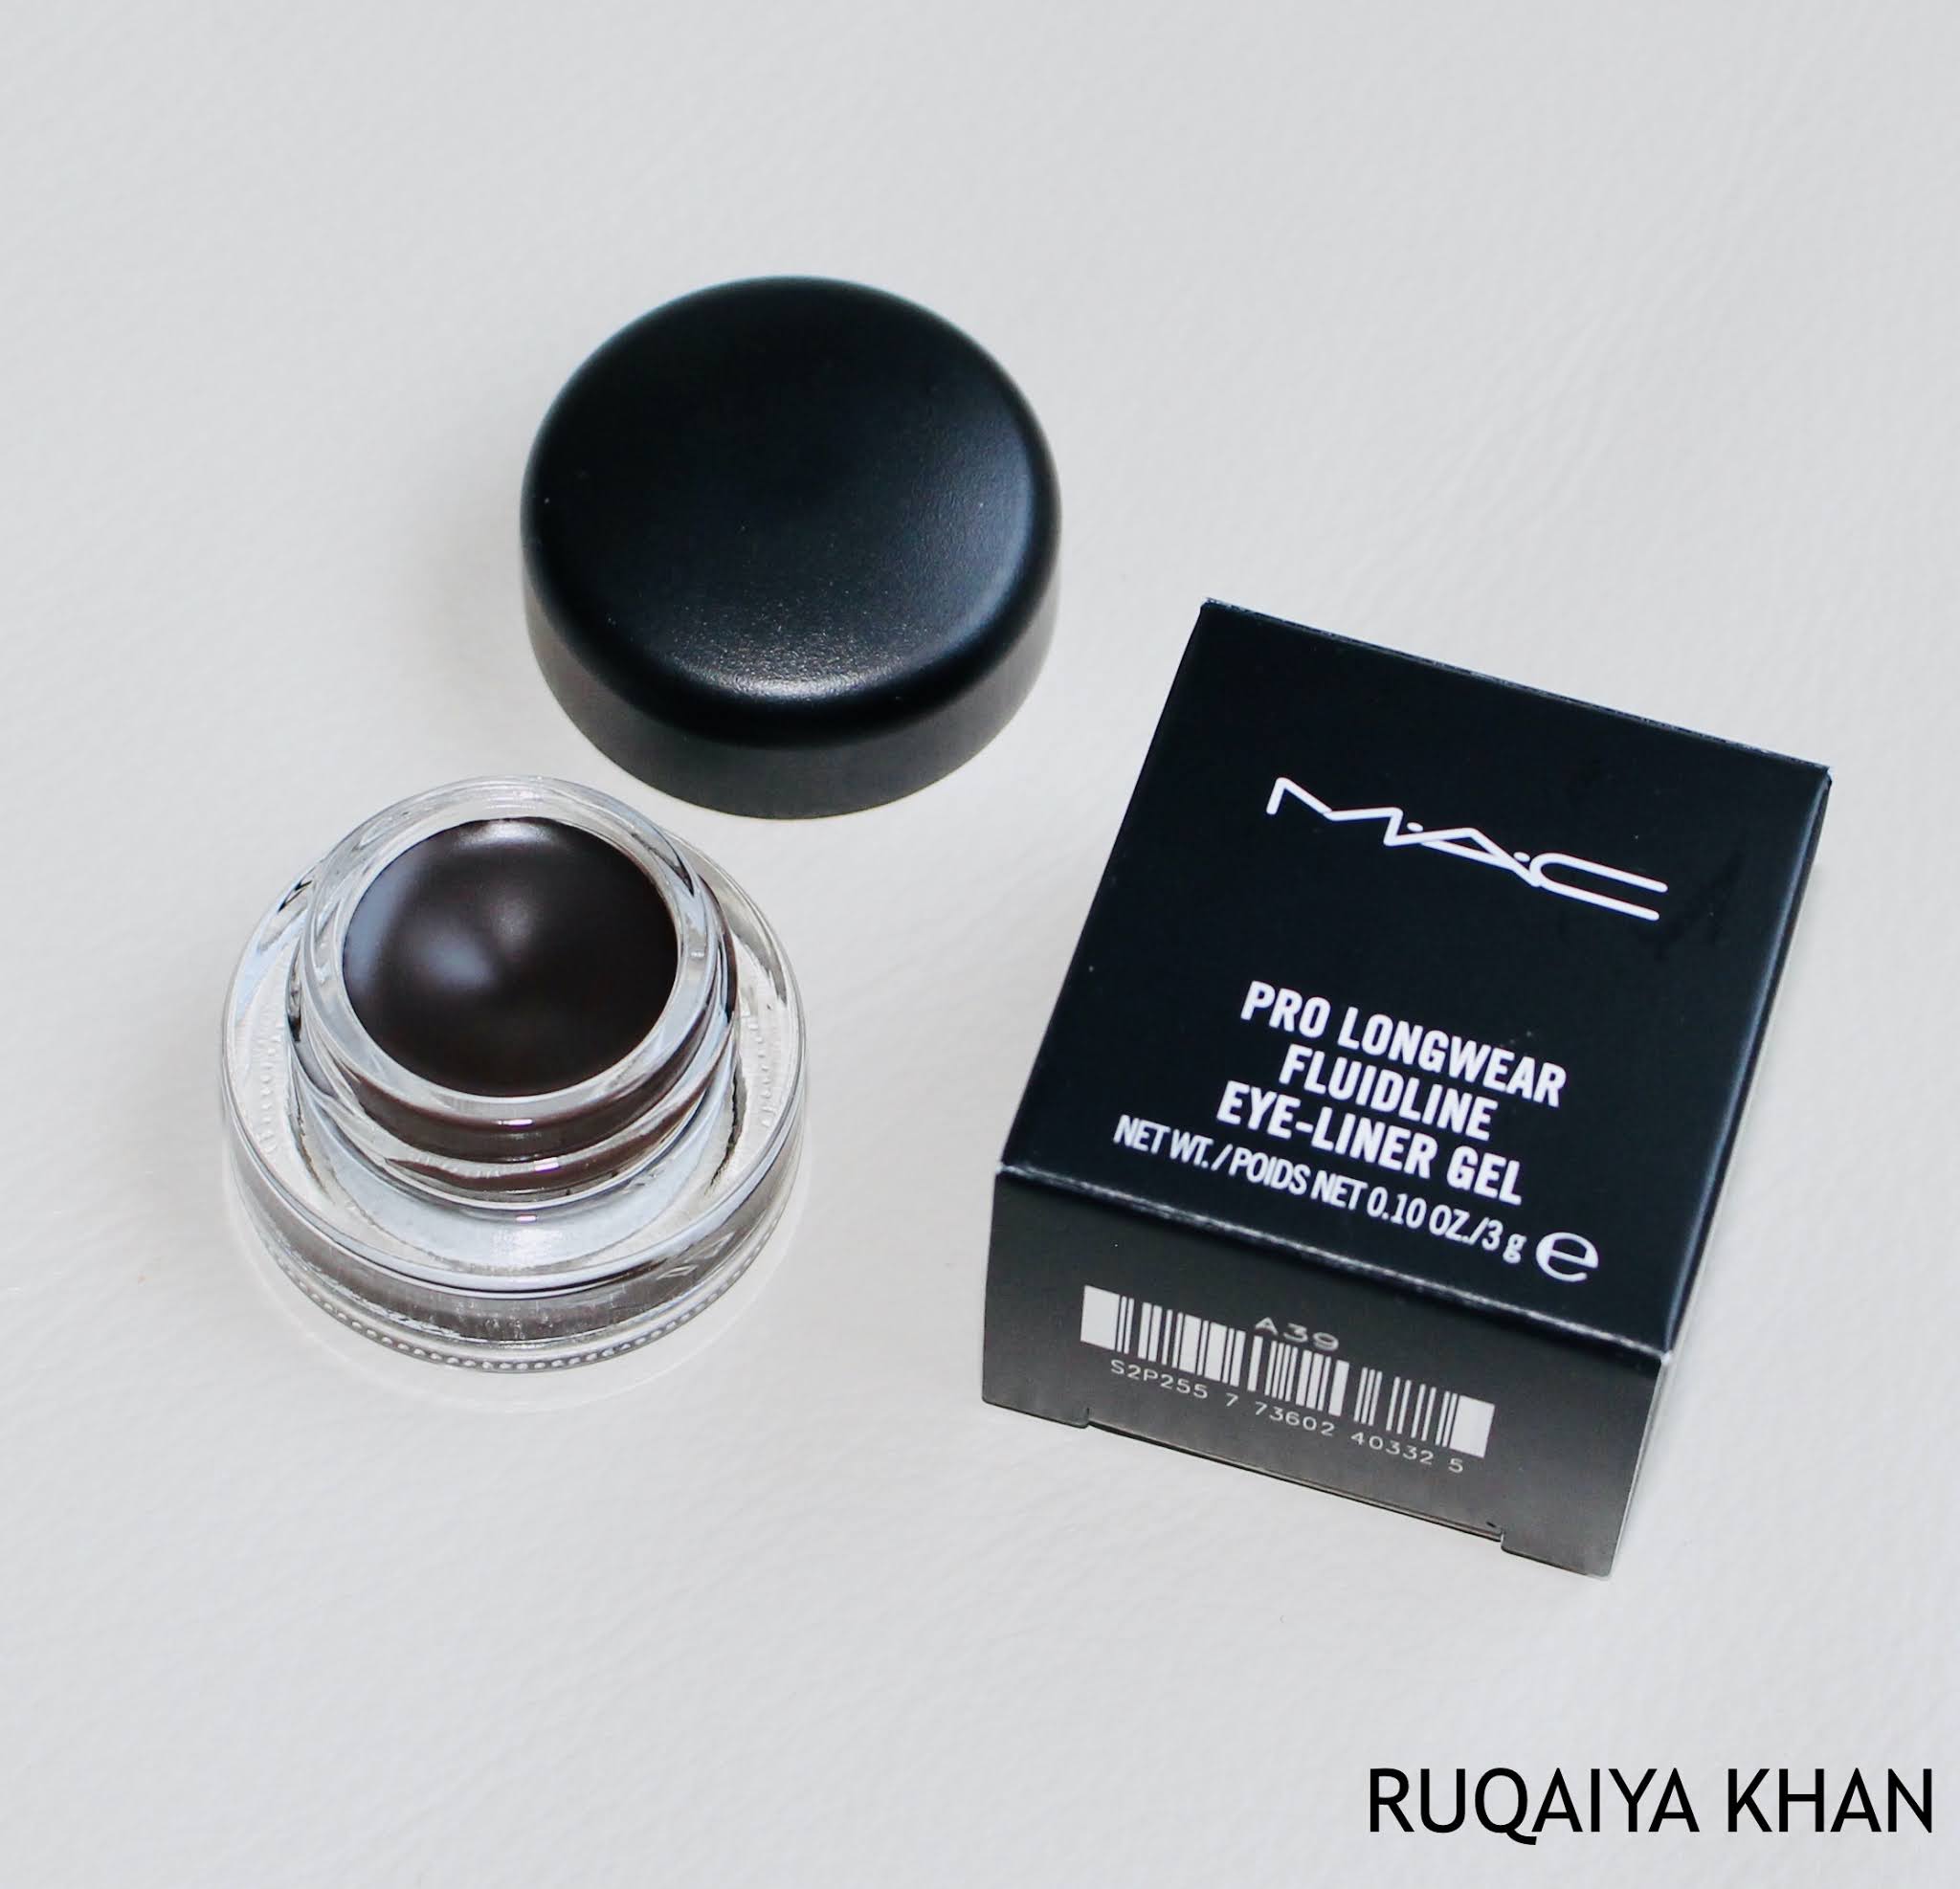 mikrobølgeovn bark Biskop Ruqaiya Khan: MAC Pro Longwear Fluidline Gel Eyeliner in Lowlights Review &  Swatches